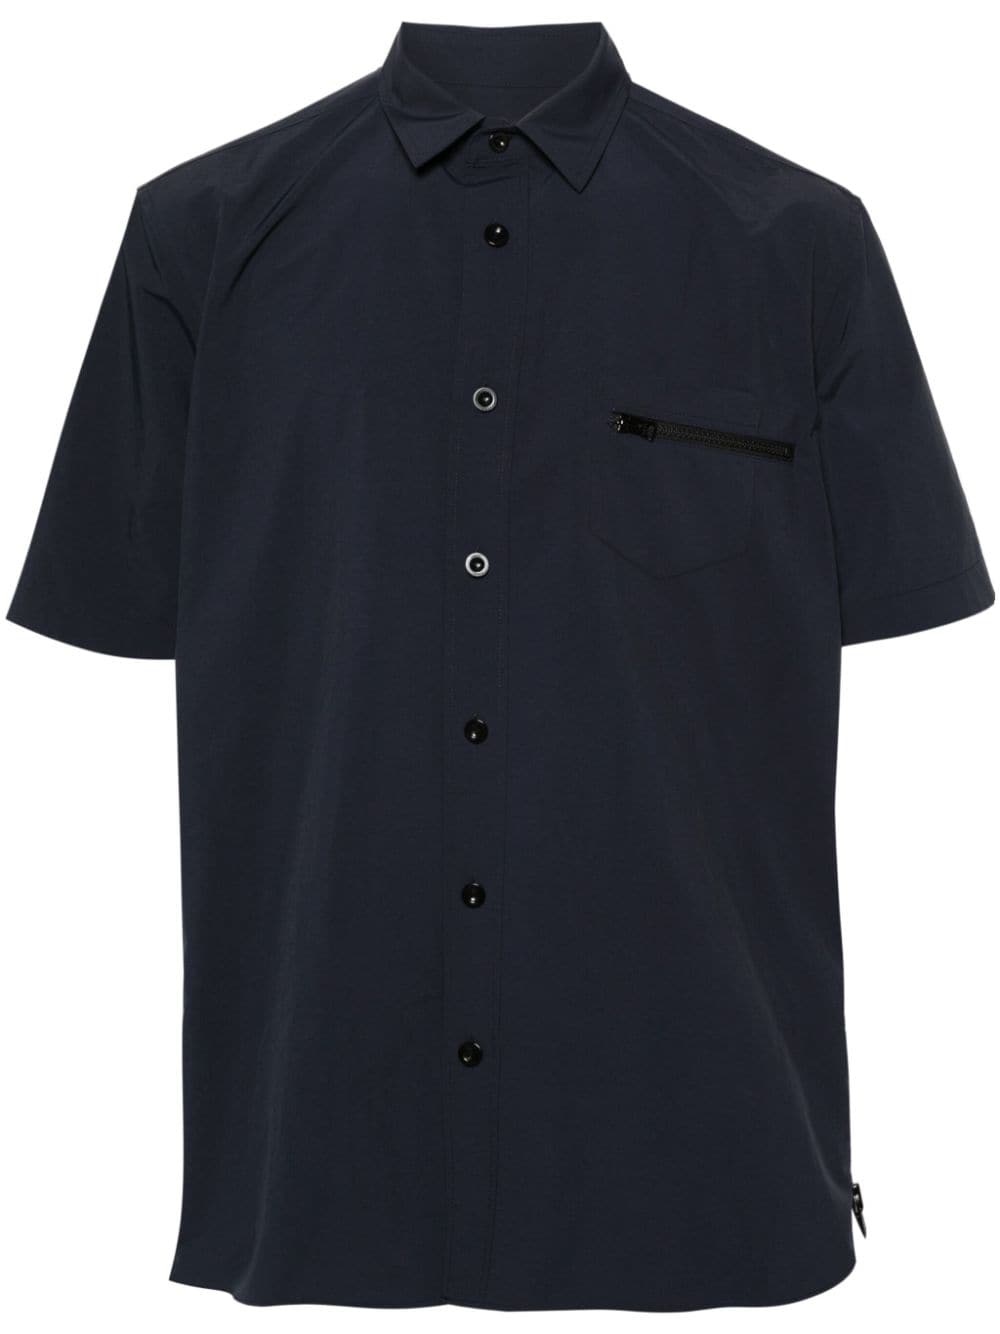 zip-pocket taffeta shirt - 1